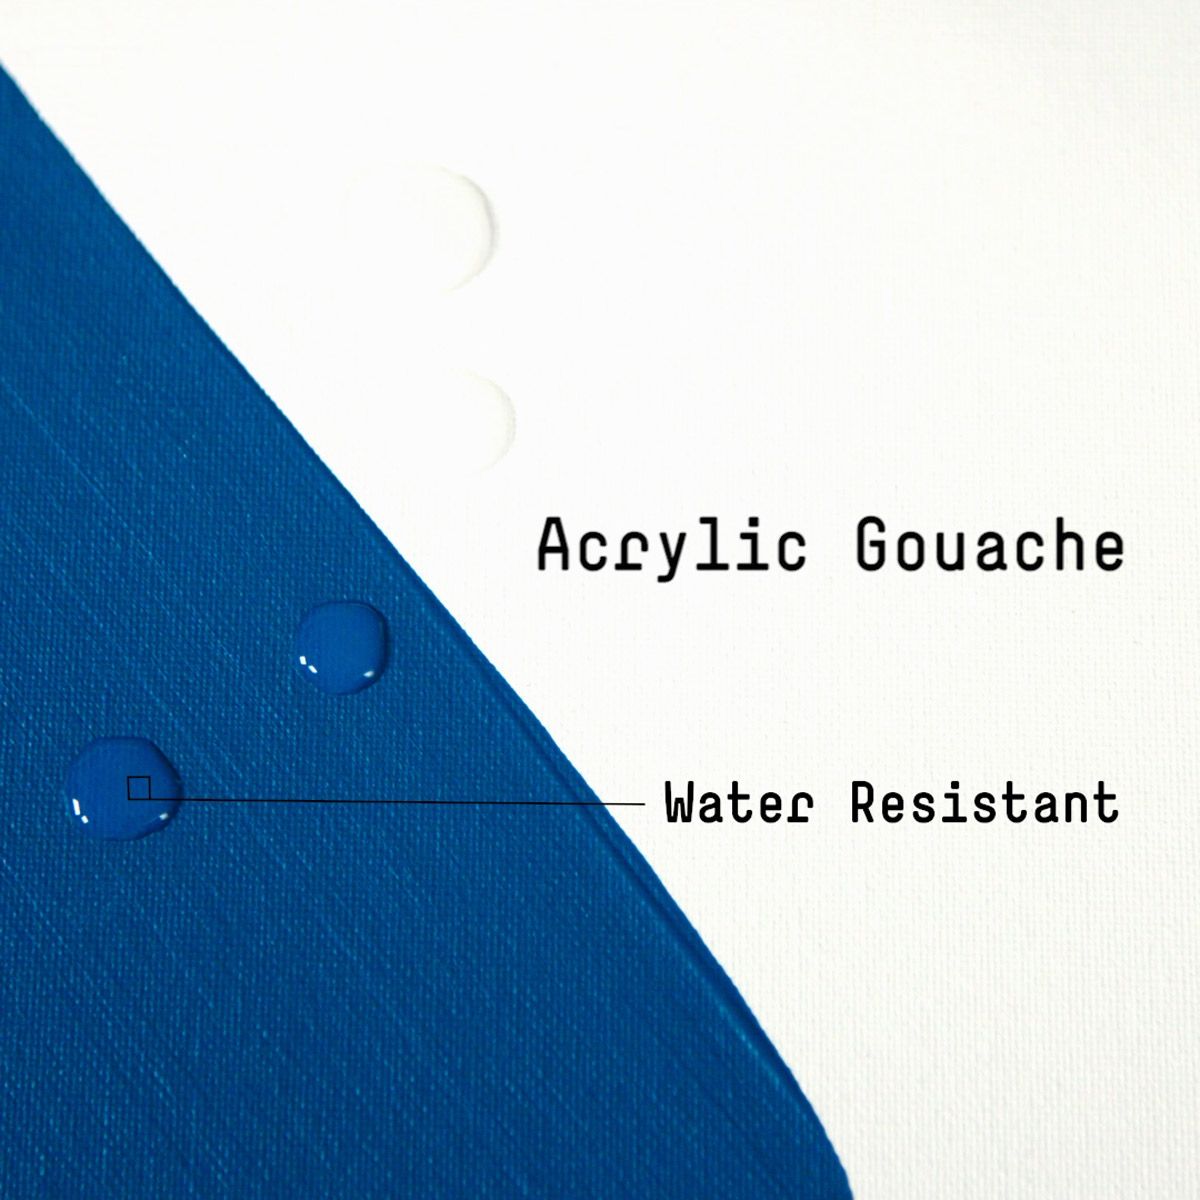 Acrylic Gouache is water-resistant!